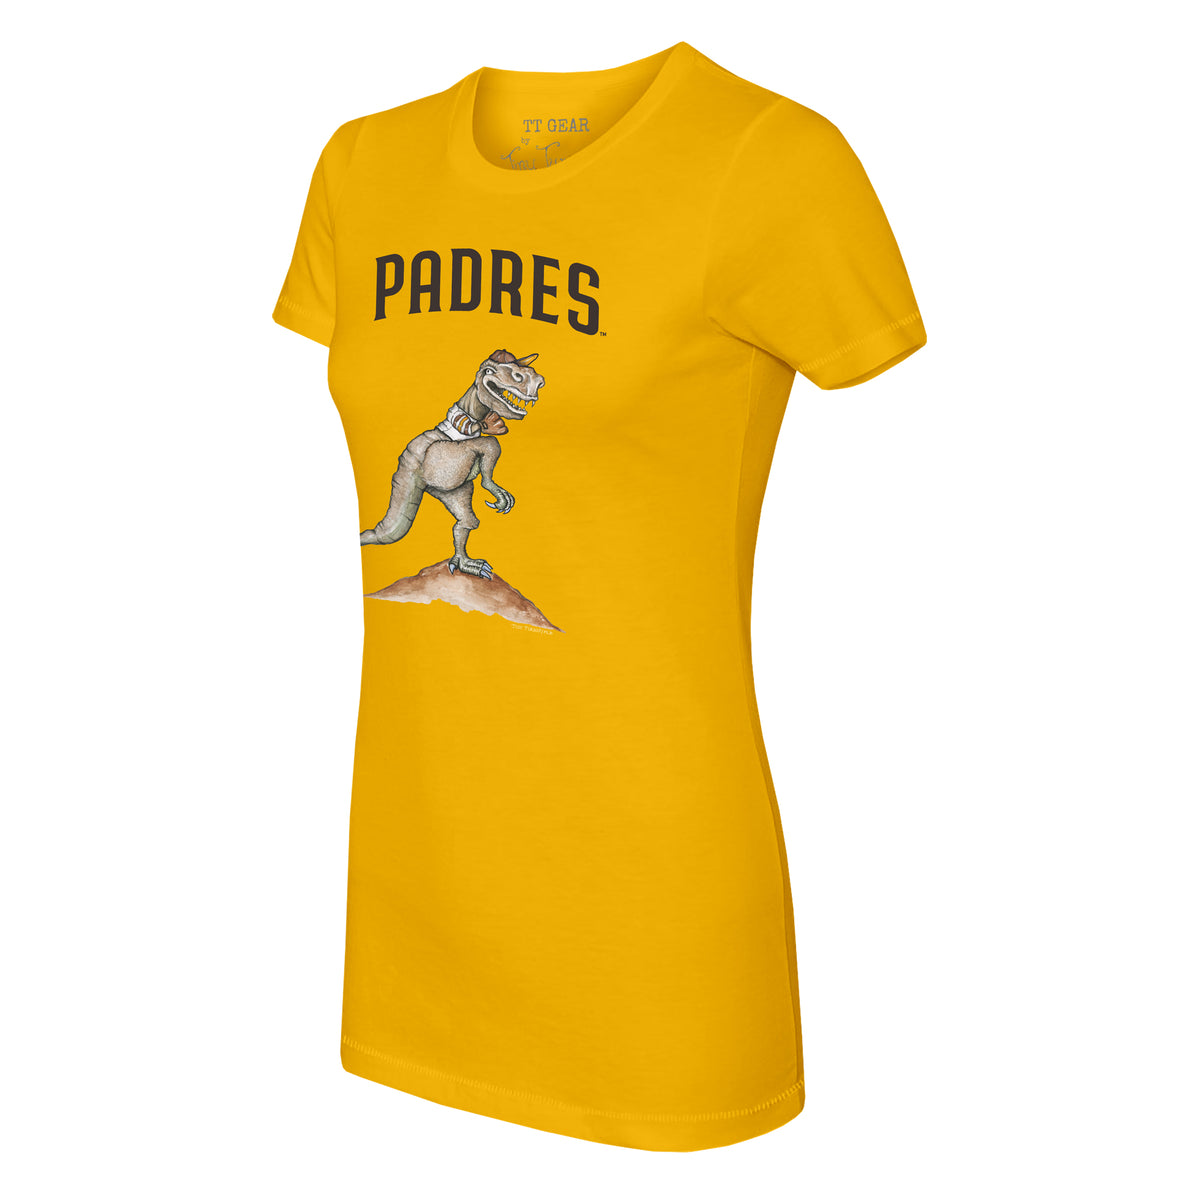 Tiny Turnip San Diego Padres Stega Tee Shirt Women's XS / Gold